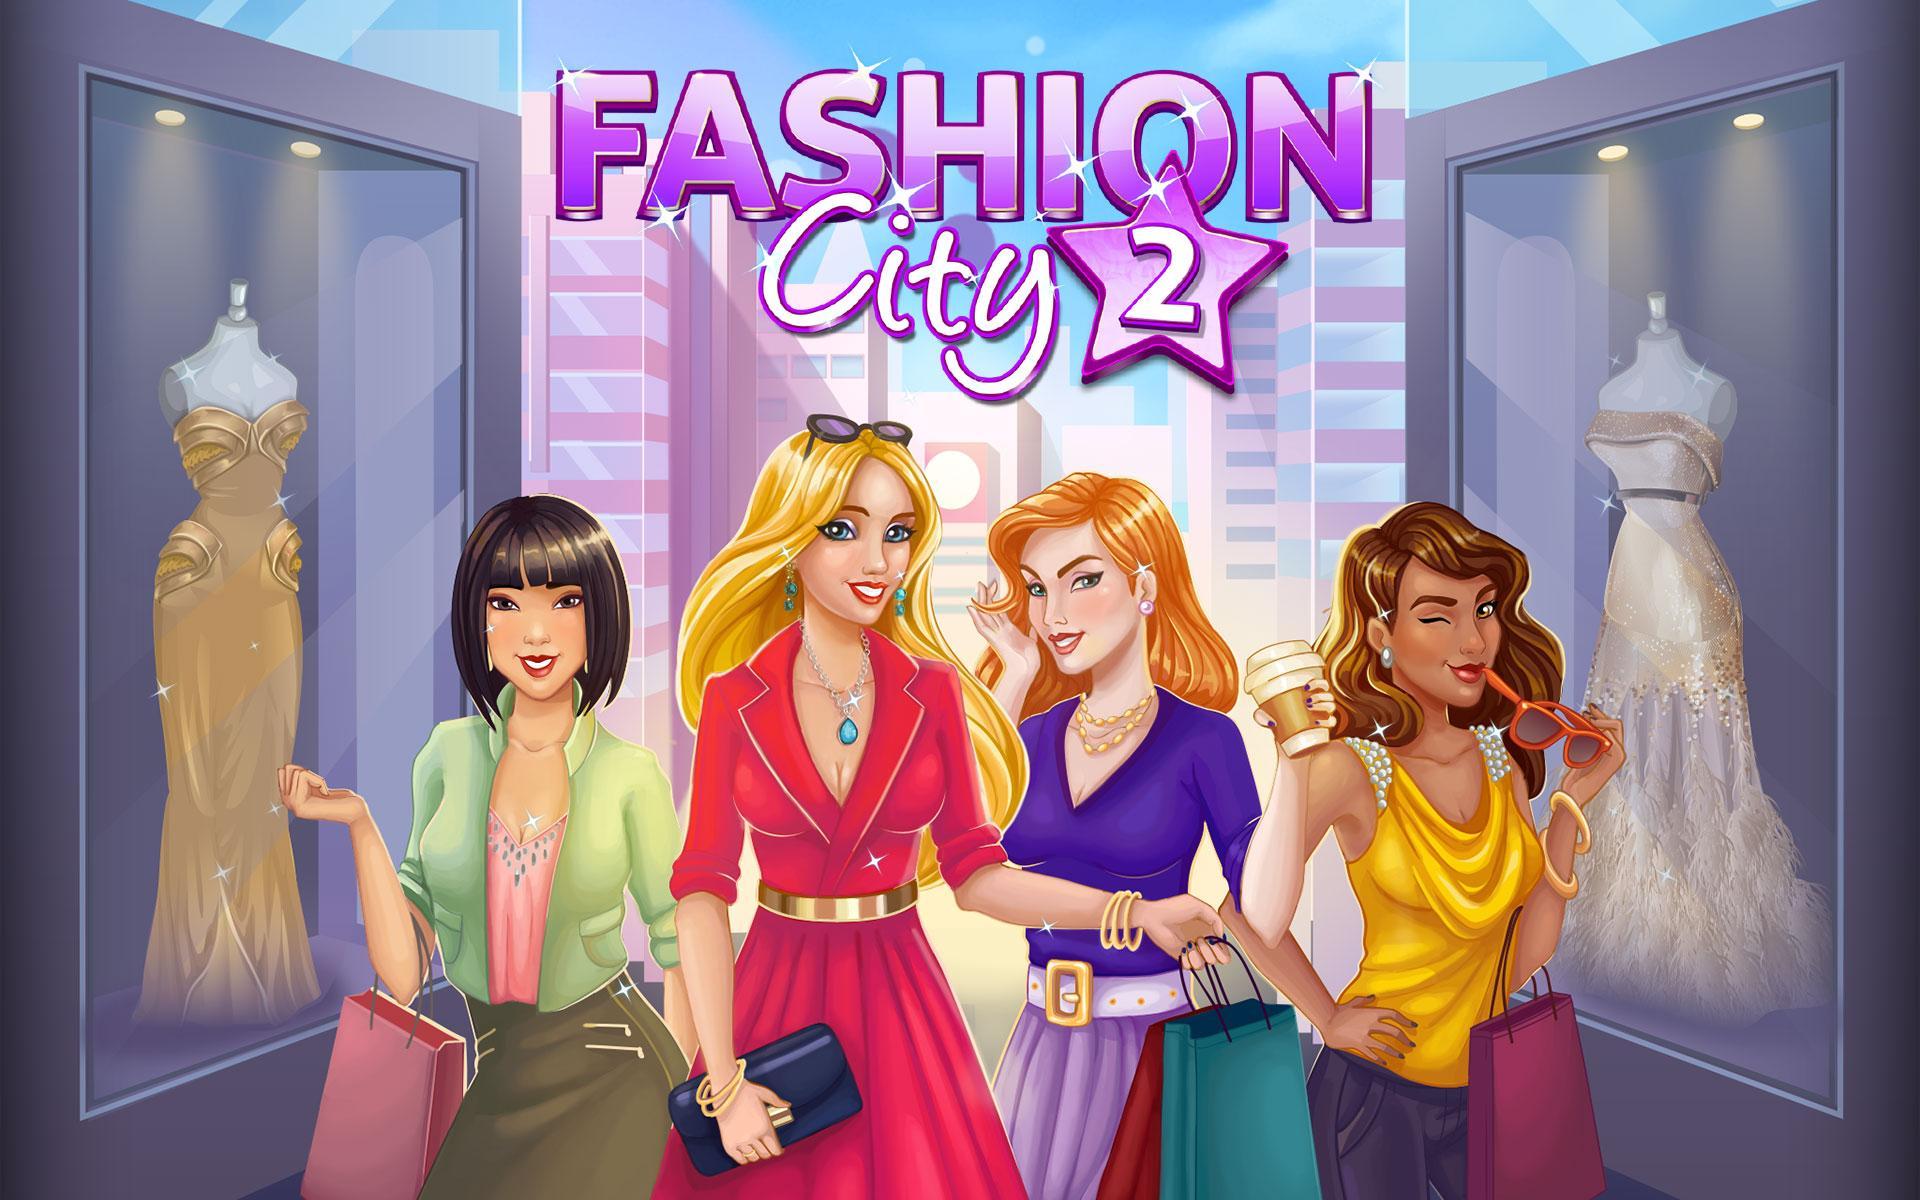 Игра мода и стиль. Fashion City игра. Fashion City игра для модниц. Игра Fashion City 2. Fashion City игра в ВК.